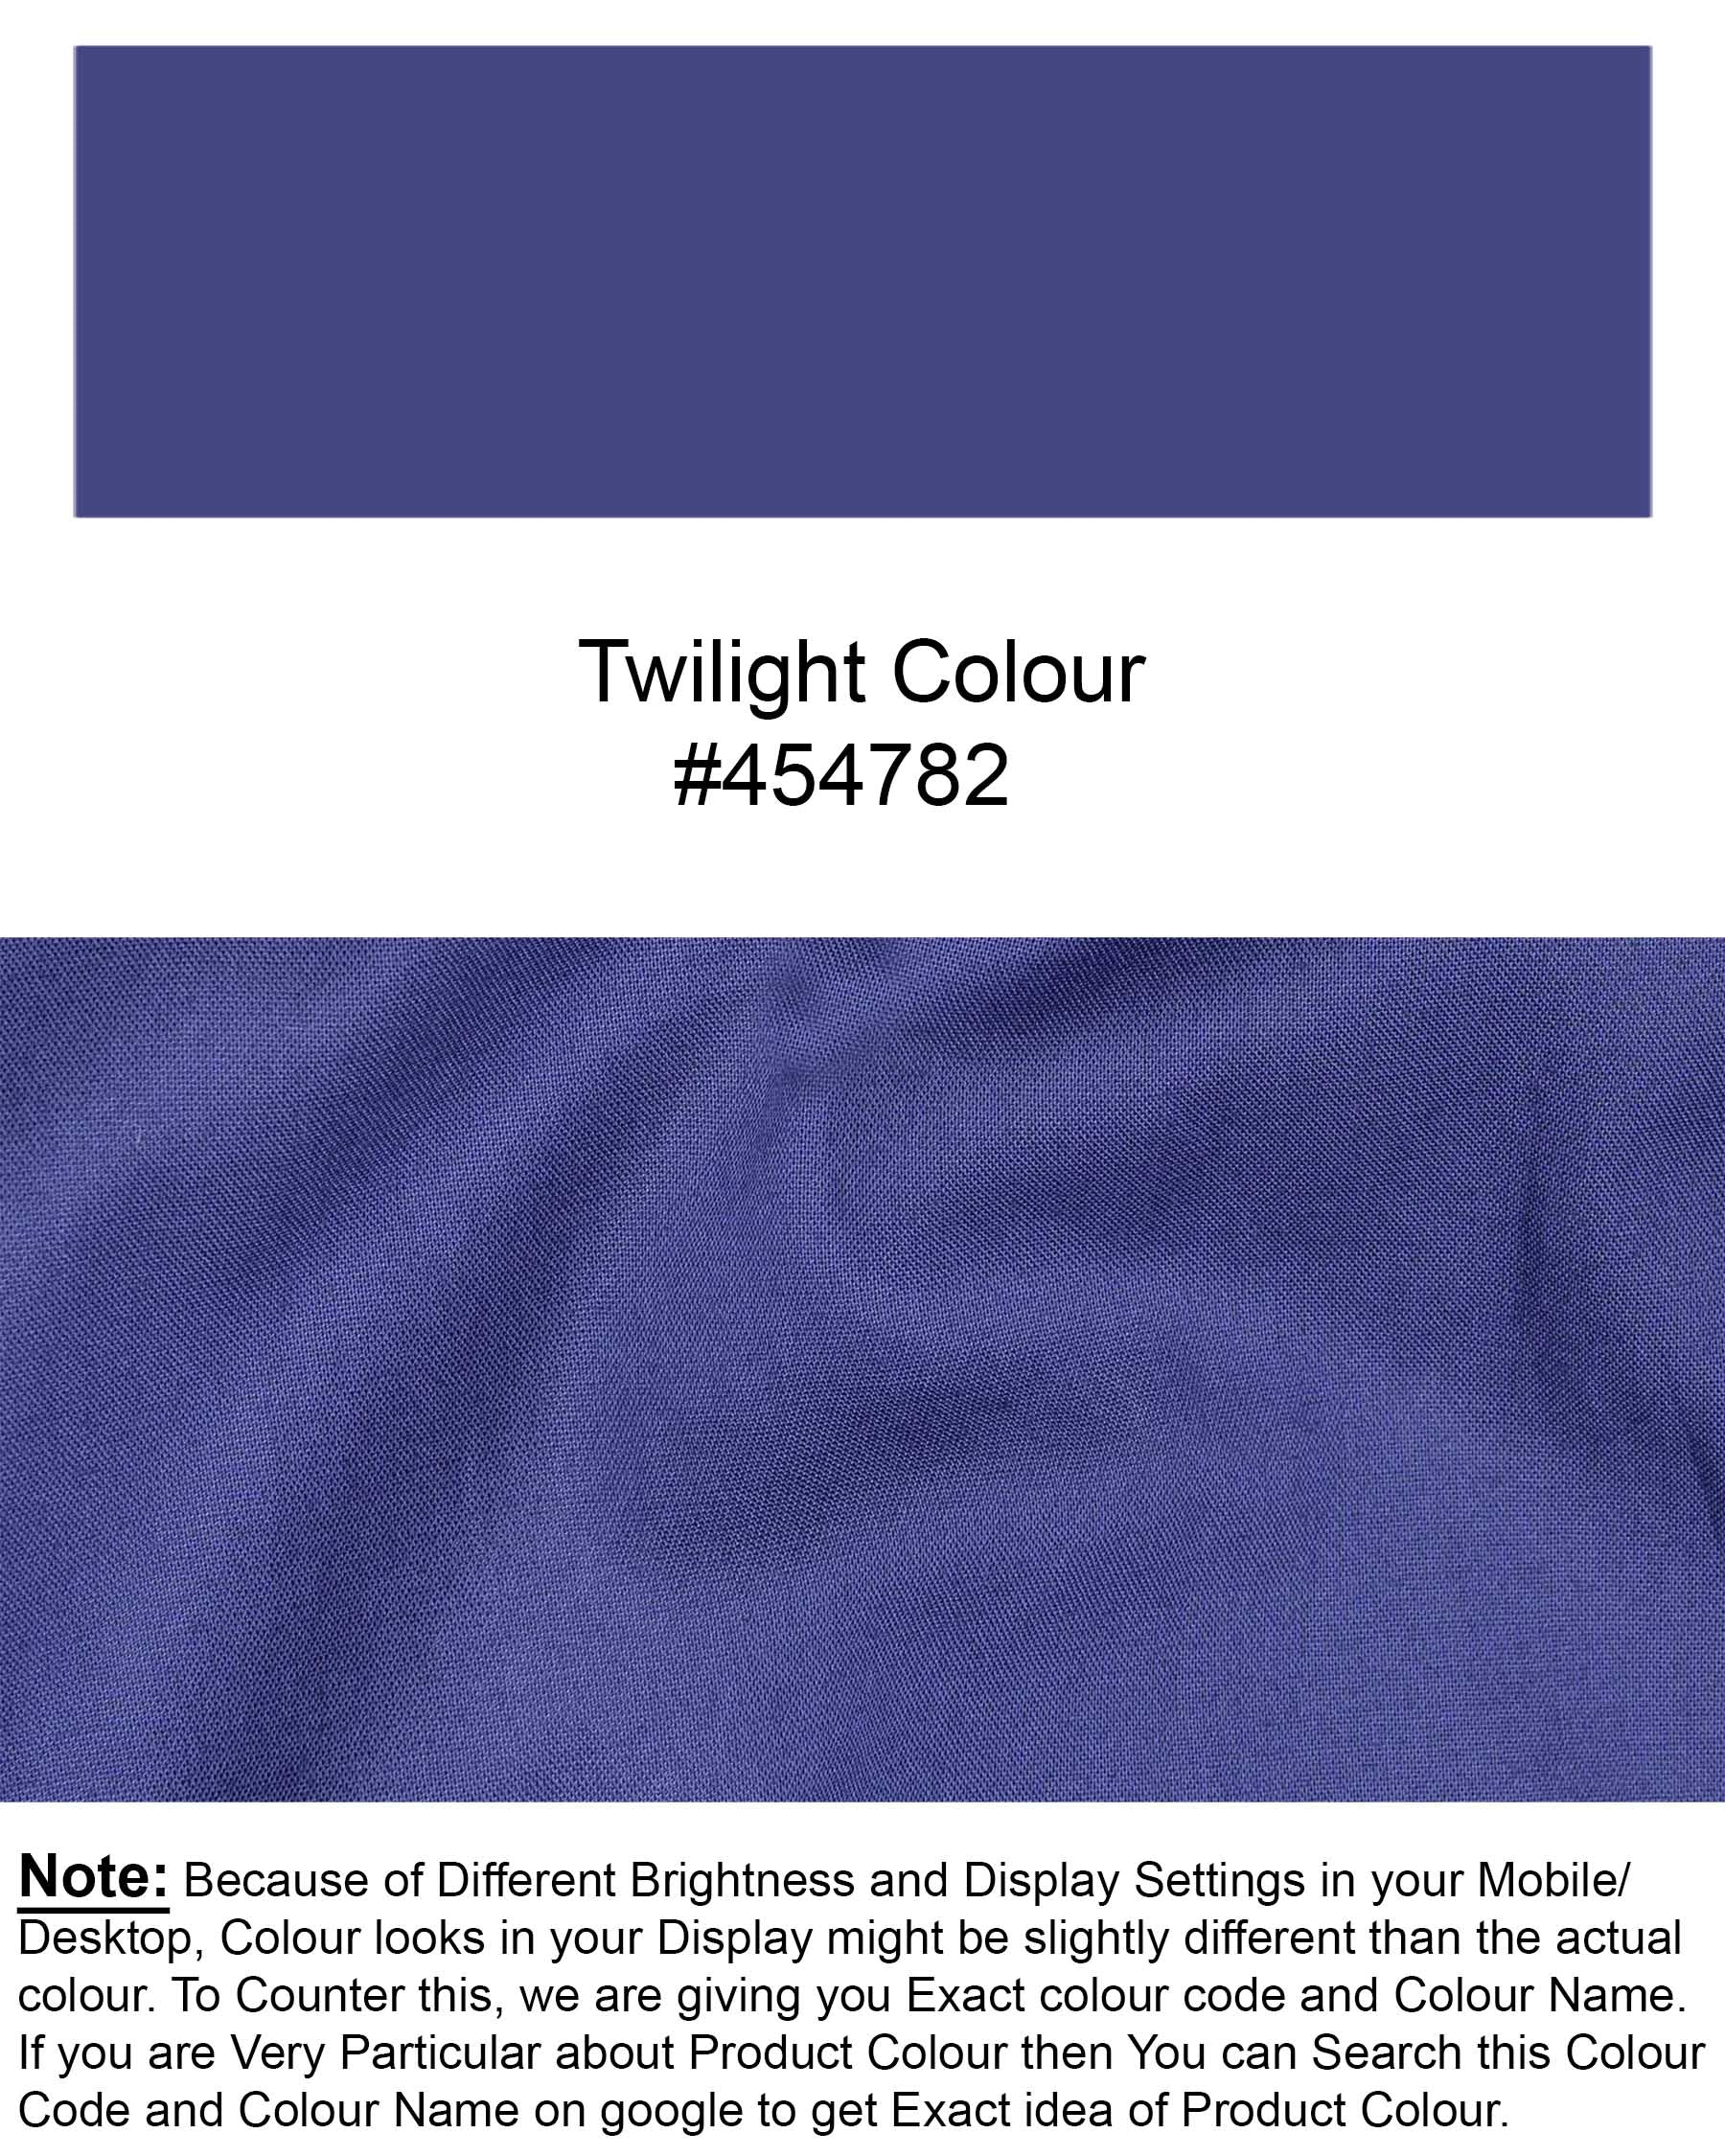 Twilight Blue Royal Oxford Shirt 7061-BLK-38,7061-BLK-38,7061-BLK-39,7061-BLK-39,7061-BLK-40,7061-BLK-40,7061-BLK-42,7061-BLK-42,7061-BLK-44,7061-BLK-44,7061-BLK-46,7061-BLK-46,7061-BLK-48,7061-BLK-48,7061-BLK-50,7061-BLK-50,7061-BLK-52,7061-BLK-52